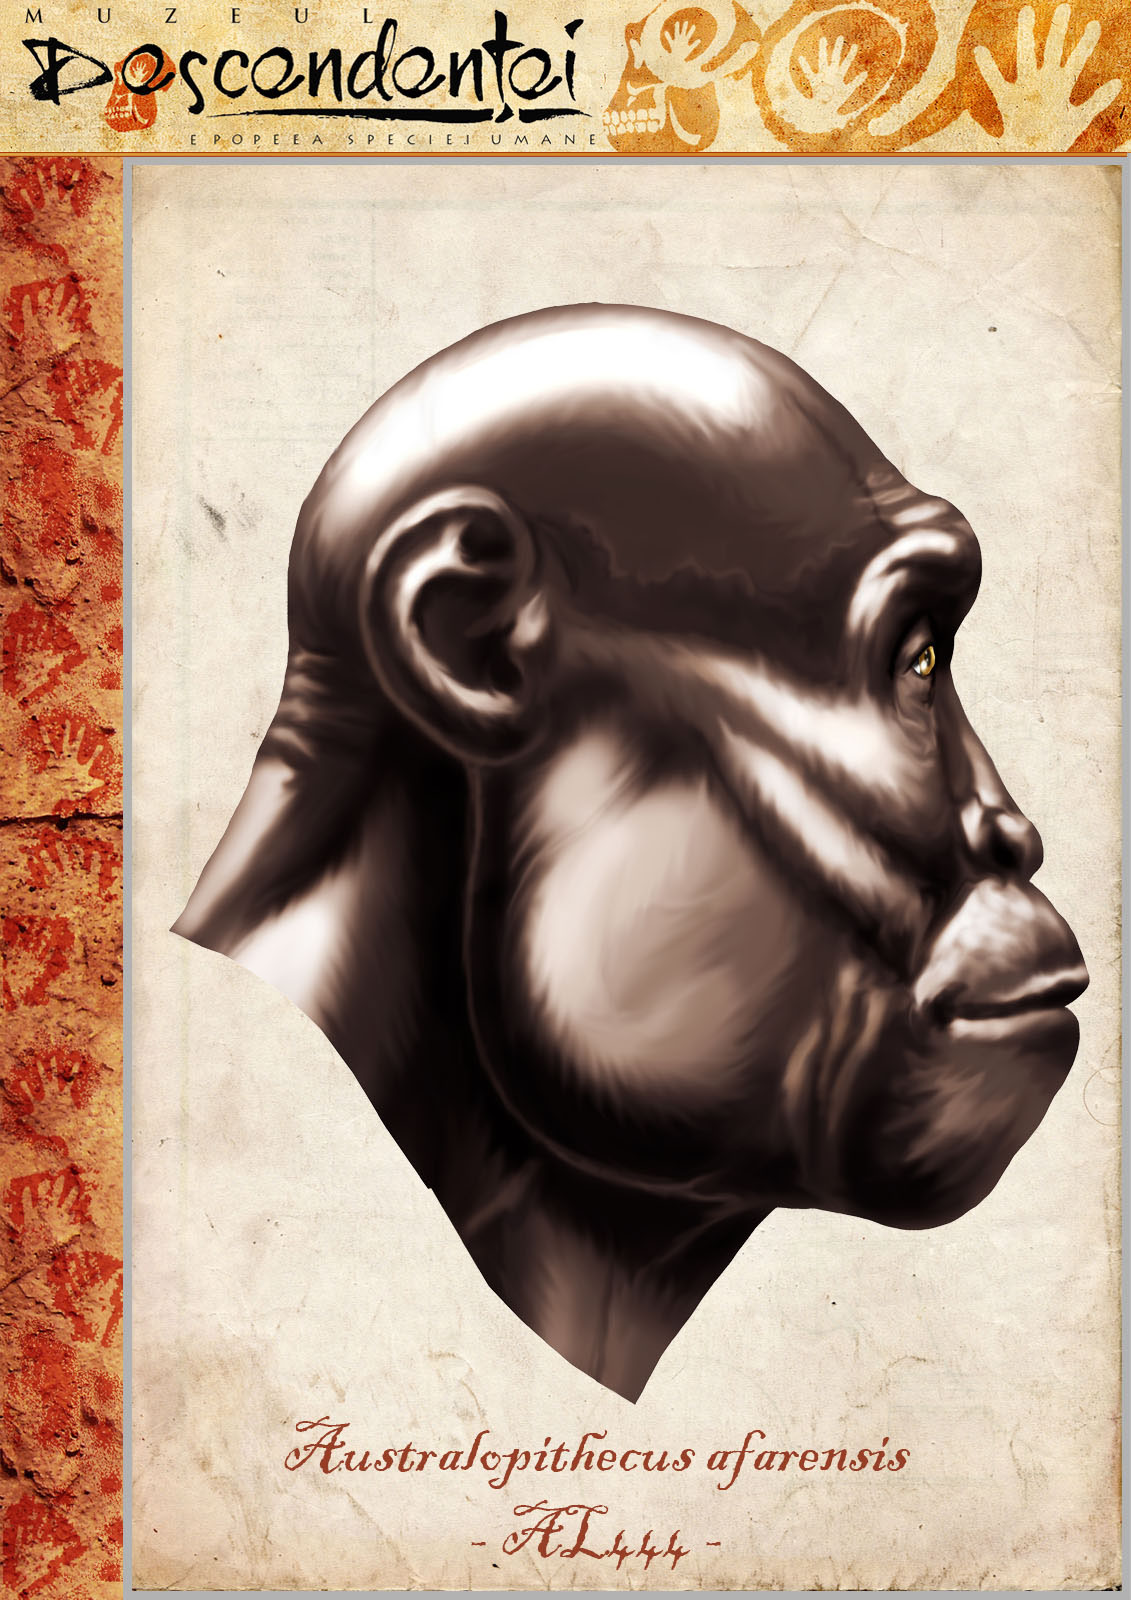 australopithecus afarensis human evolution hominid homo sahelanthropus ardipithecus kenyanthropus paranthropus habilis ergaster erectus floresiensis antecessor